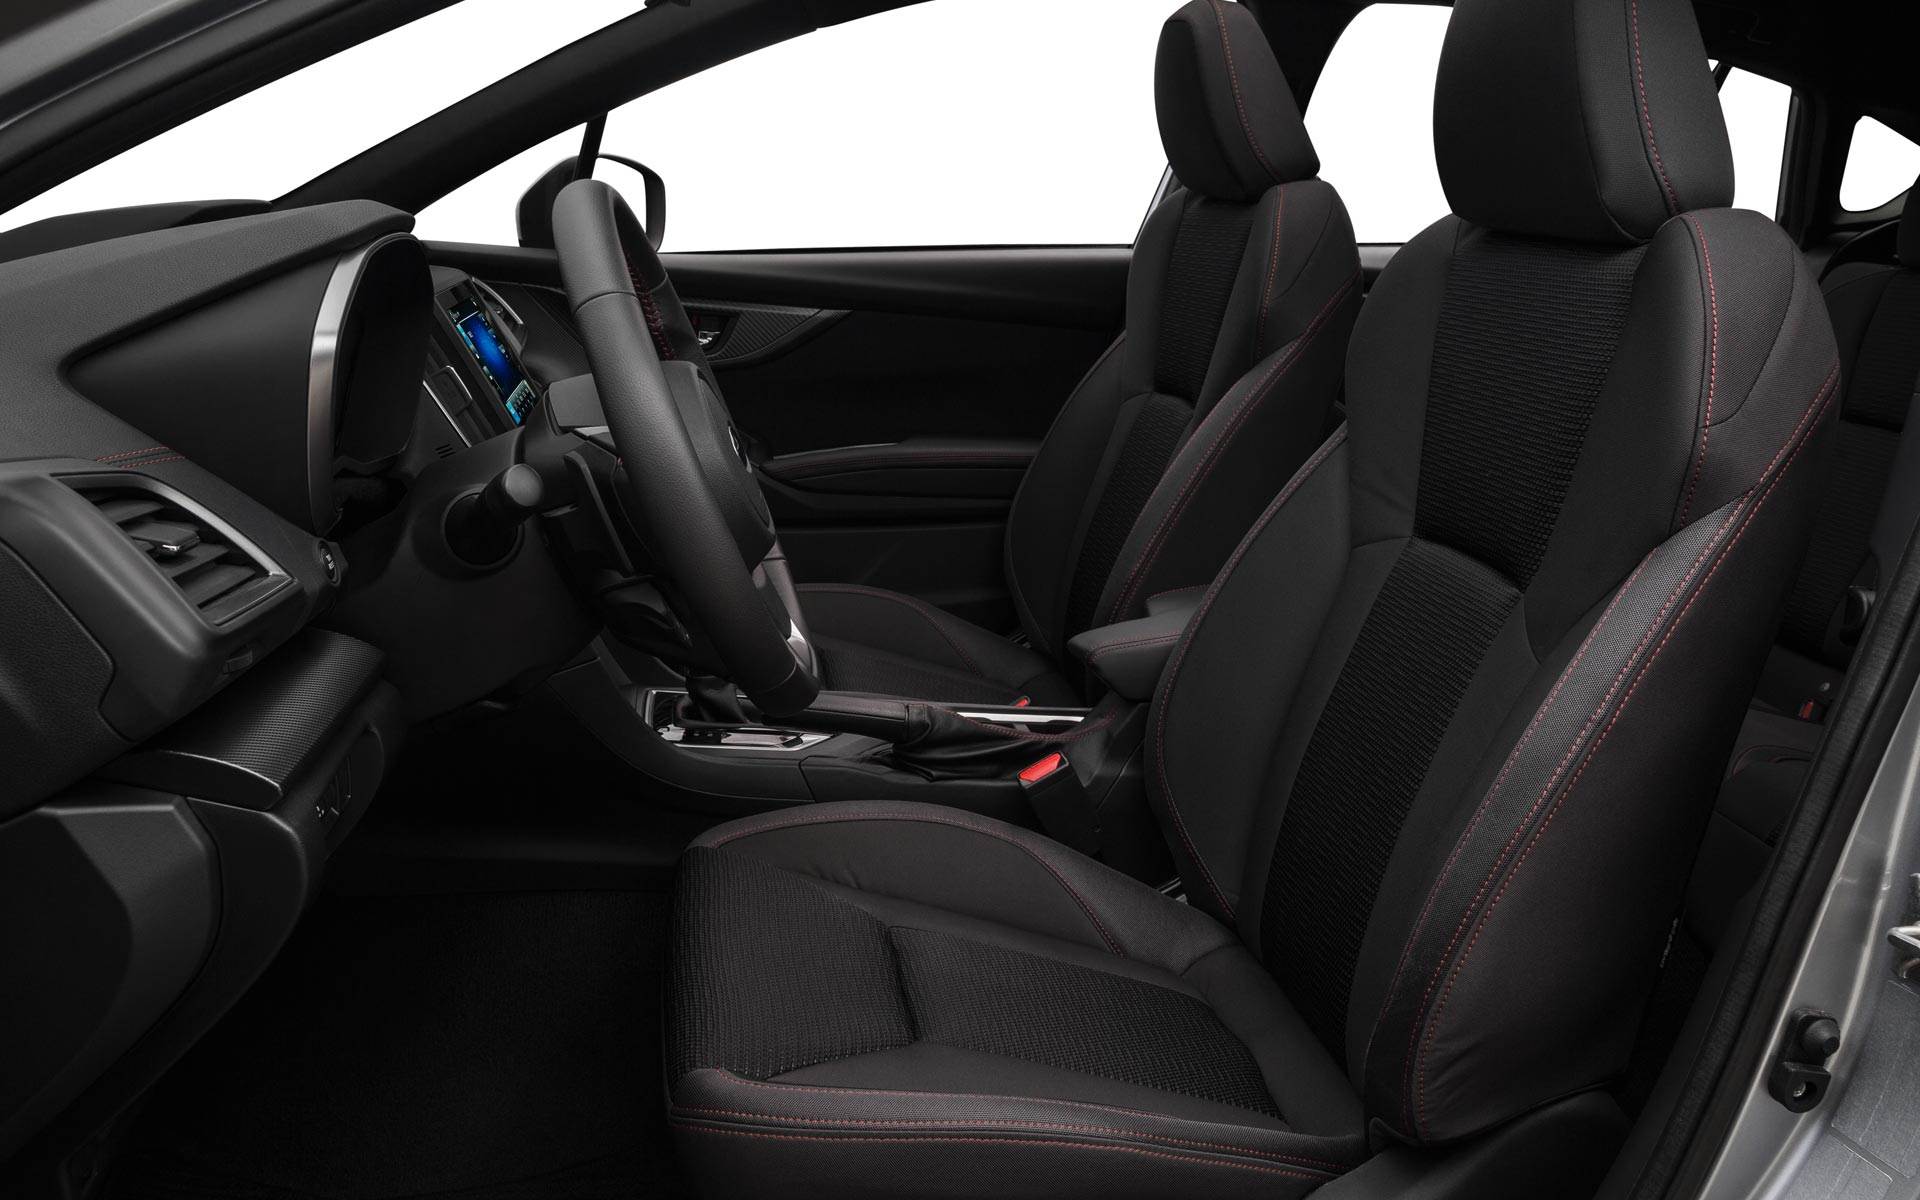 Interior Of The 2018 Subaru Impreza